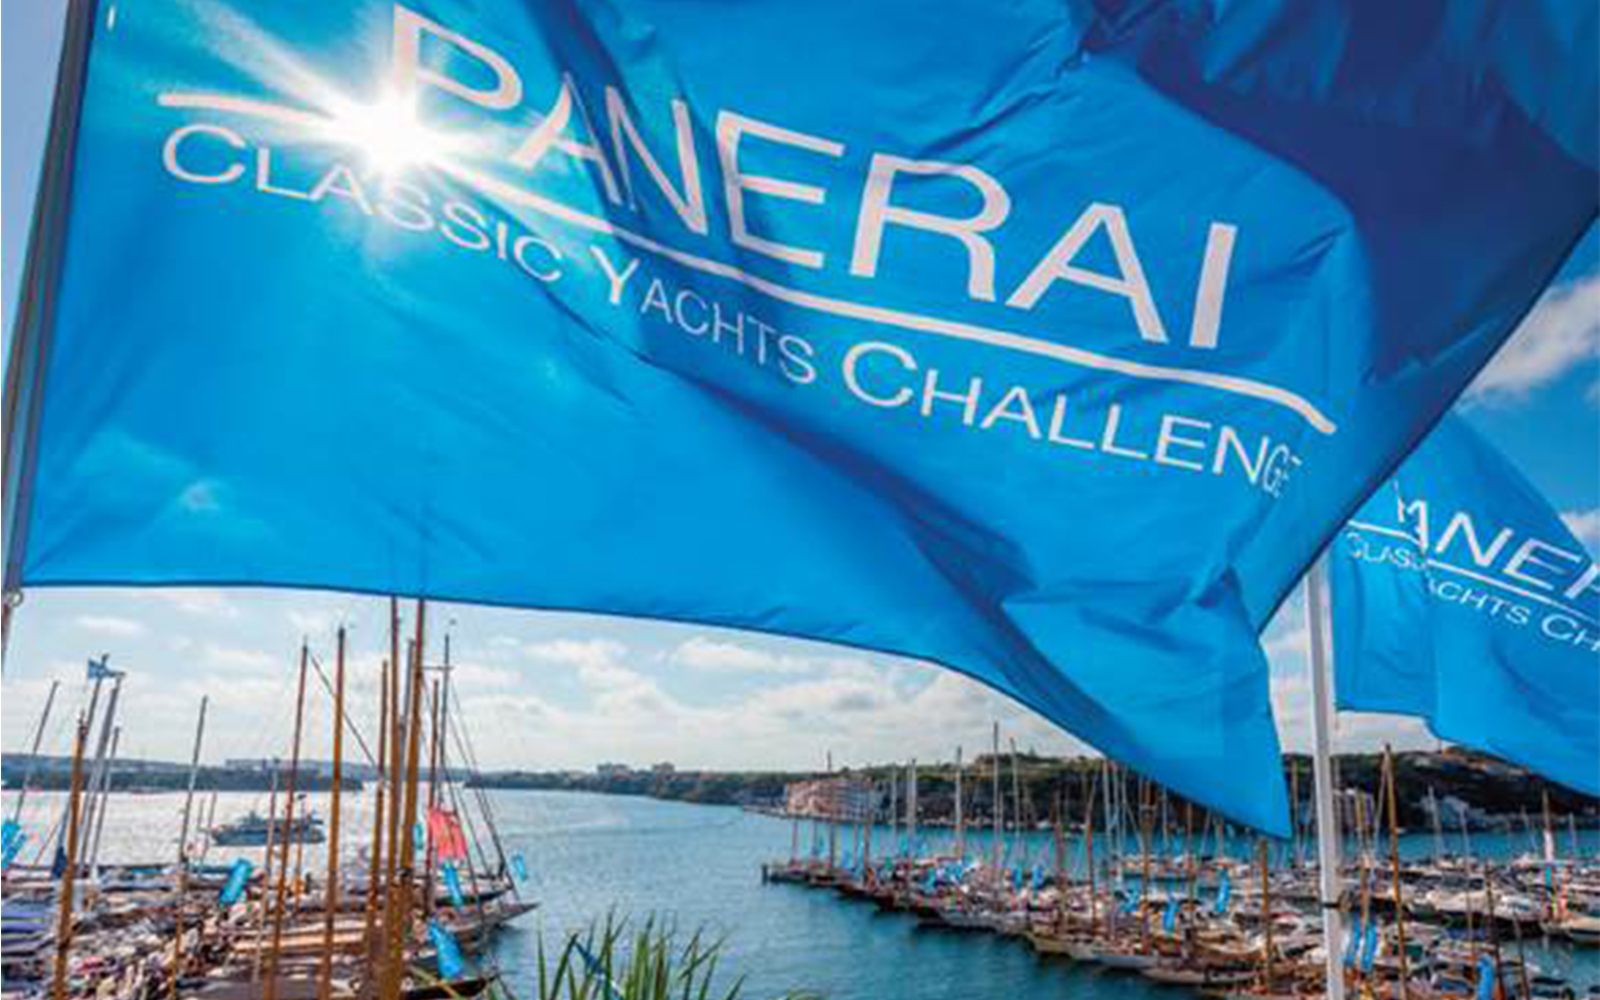 Panerai Classic Yachts Challenge 2 - Boat Shopping